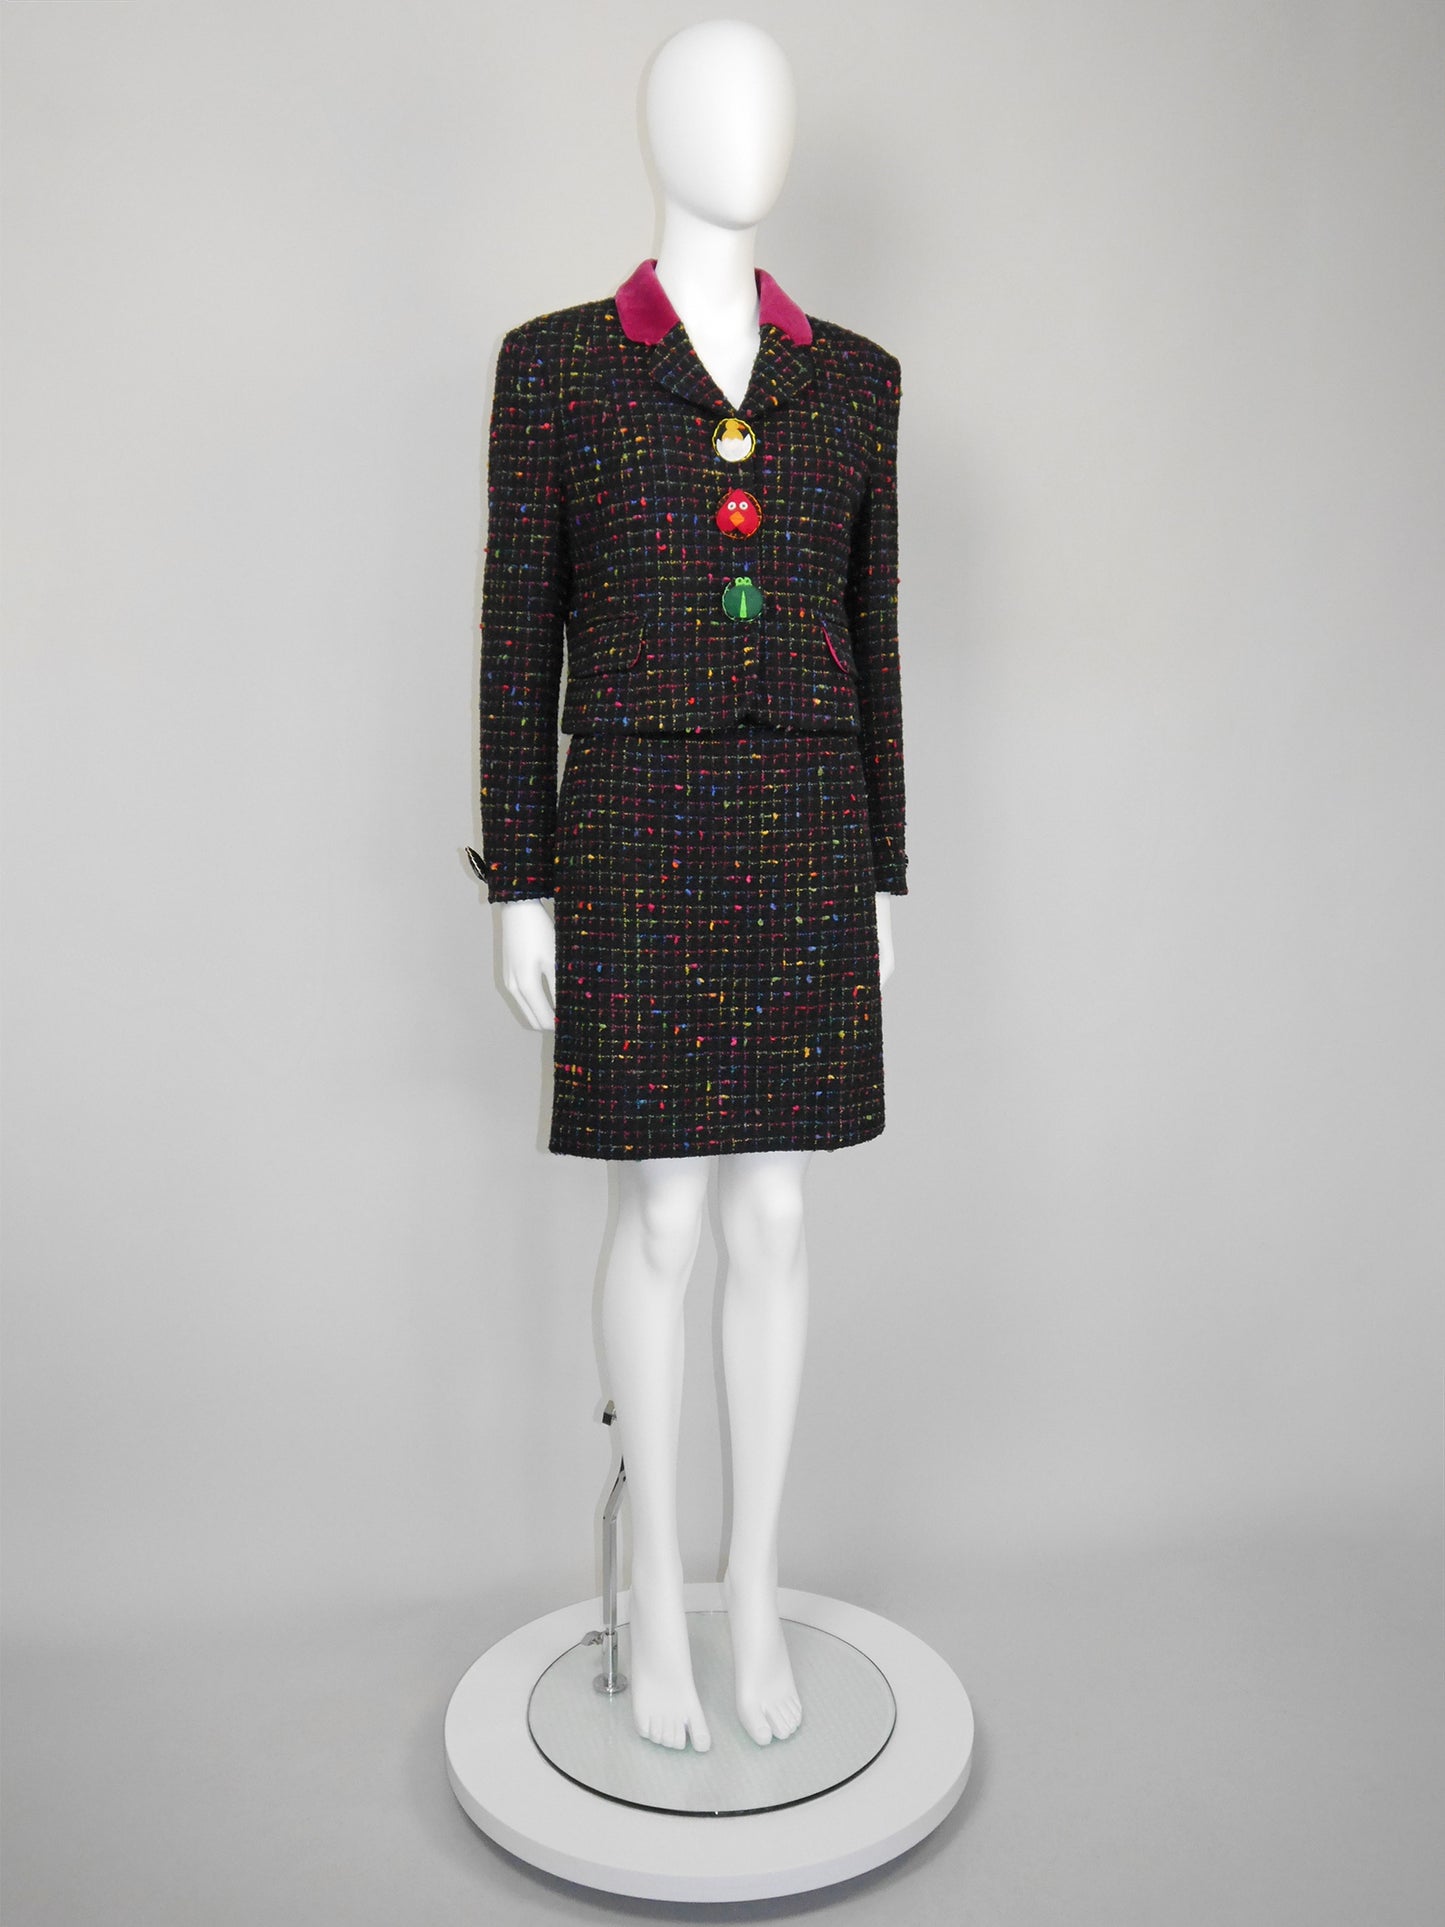 MOSCHINO 1990s Vintage "Push for Nature" Bouclé Jacket & Skirt Suit Size S-M